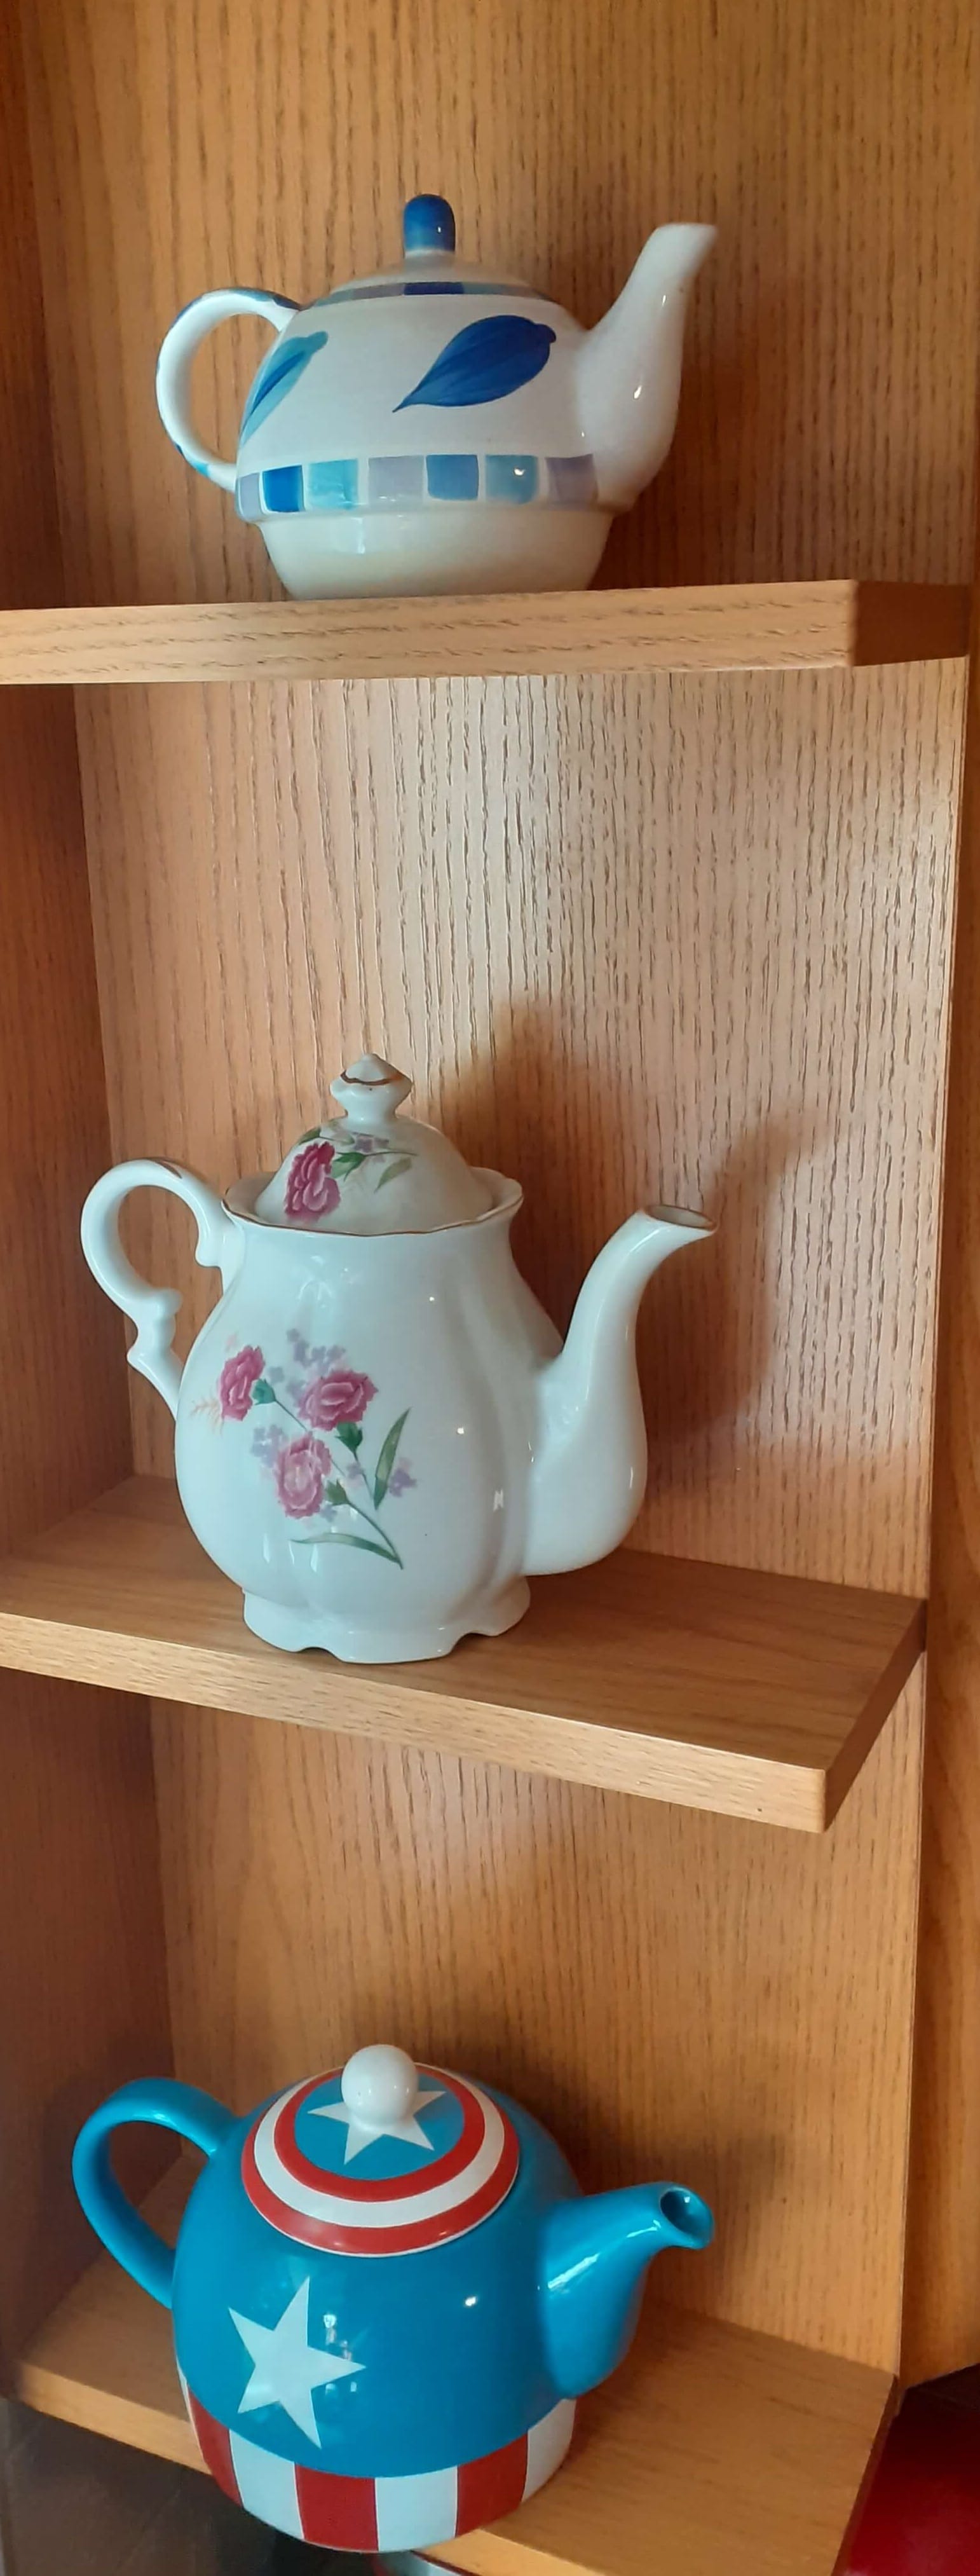 three tea pots on shelves